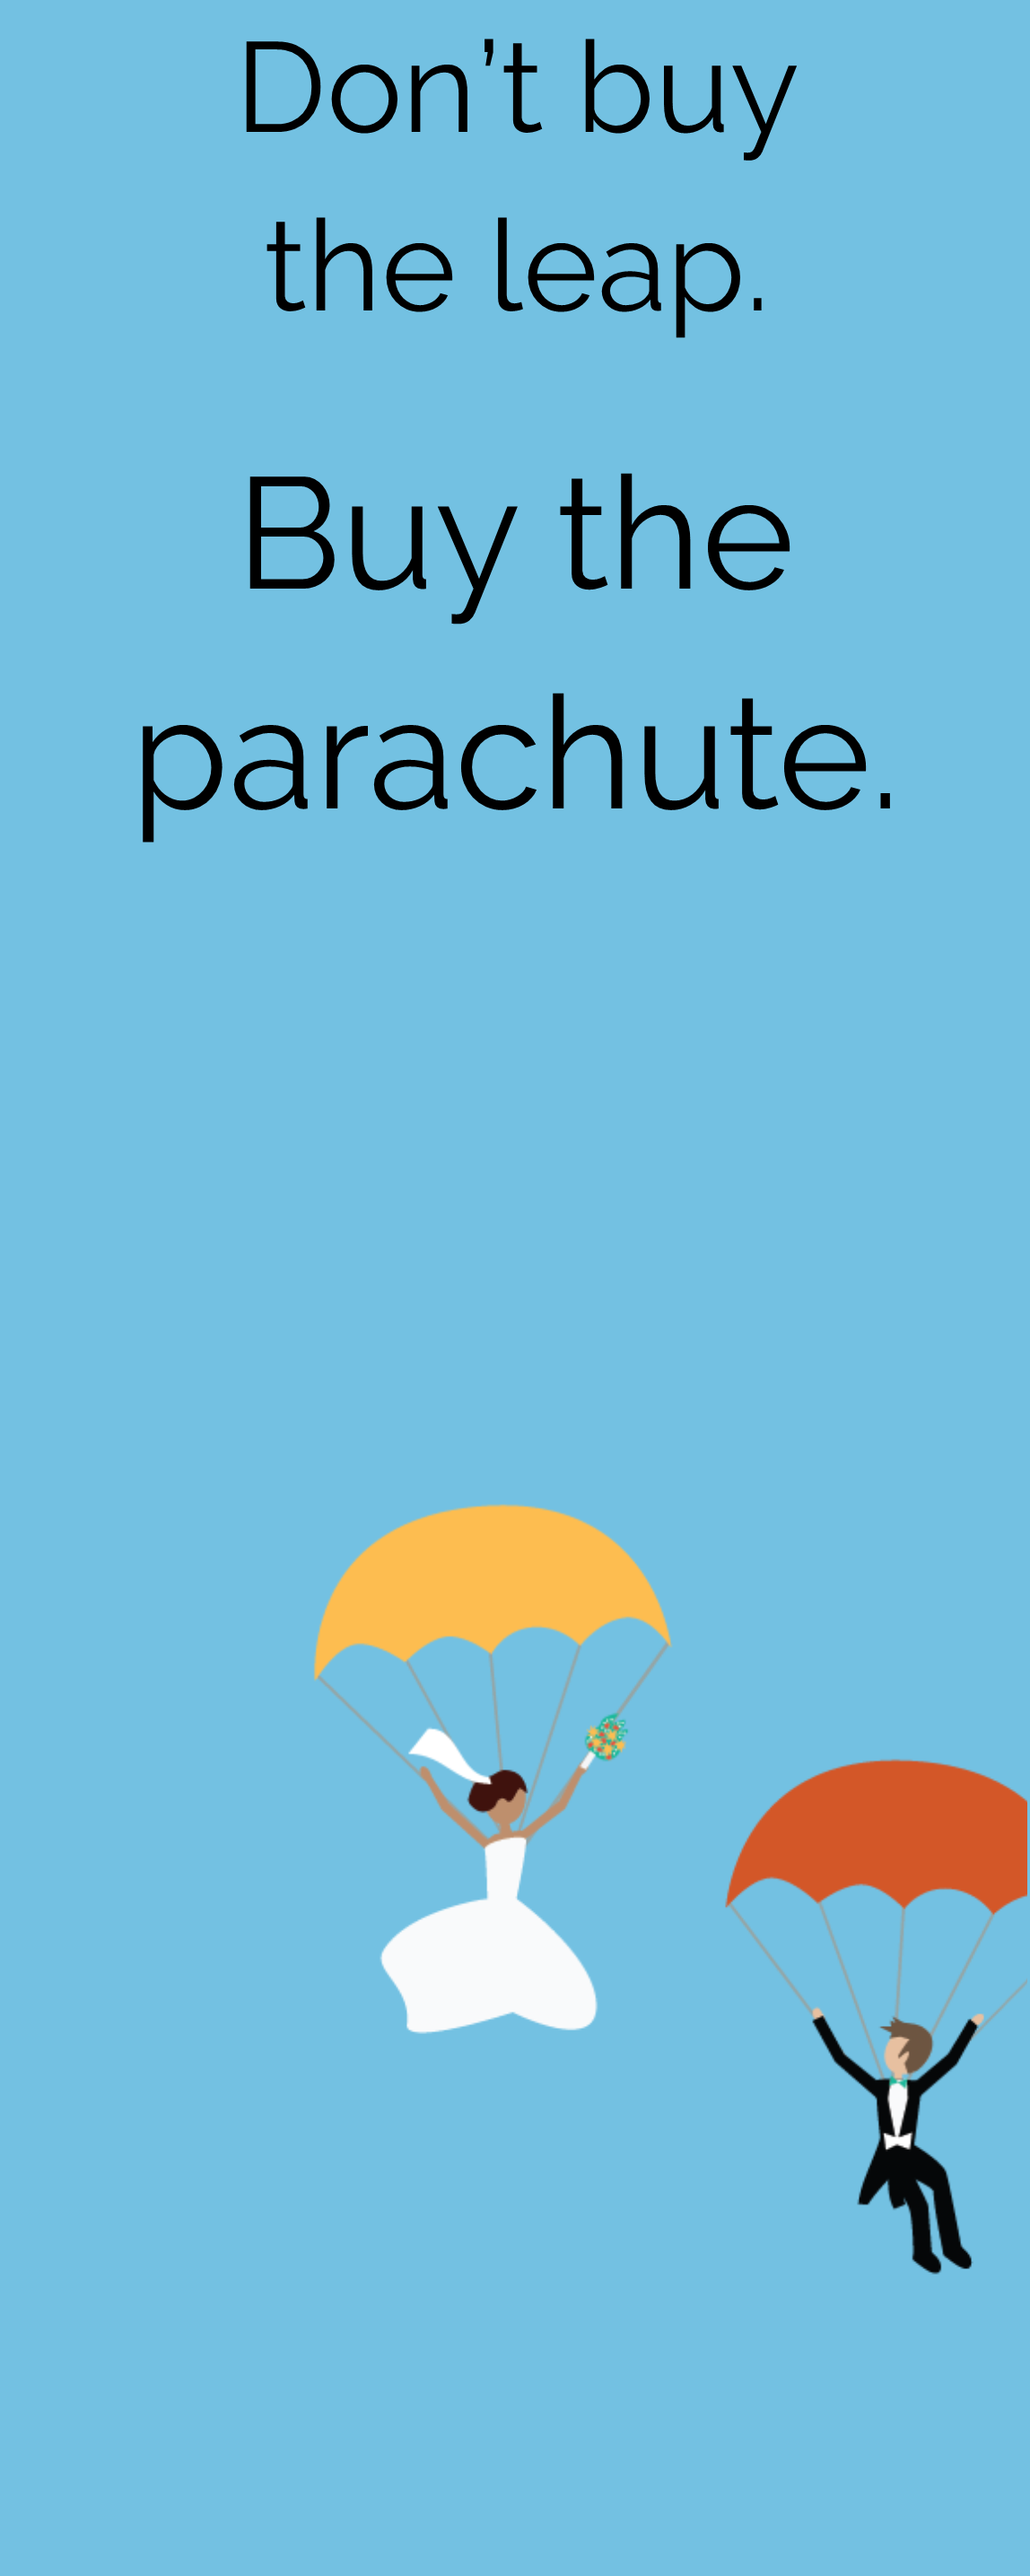 Parachute_-_side.png